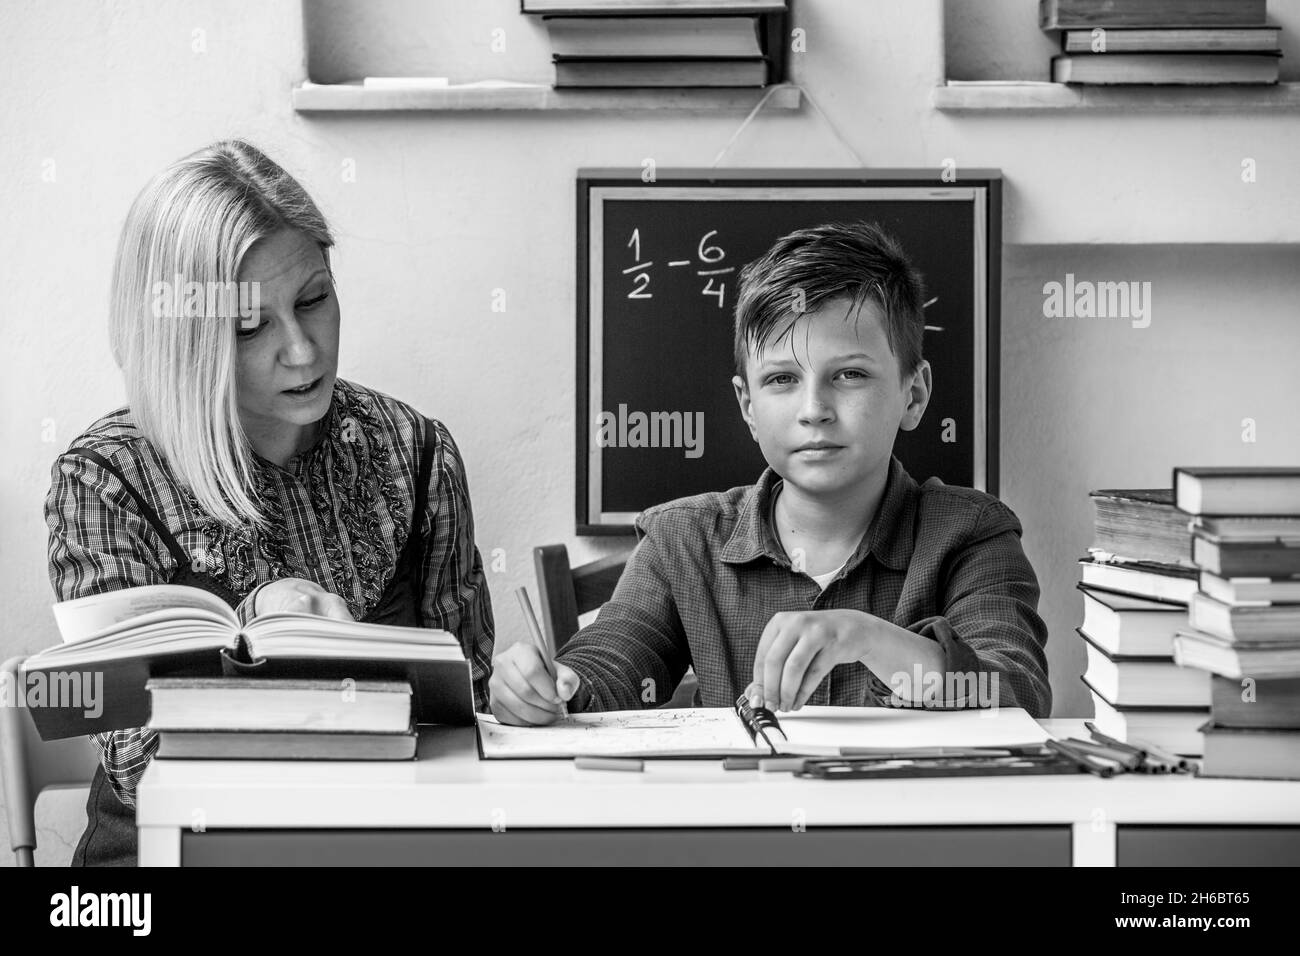 Elementary school boy doing homework with teacher. Black and white photo. Stock Photo